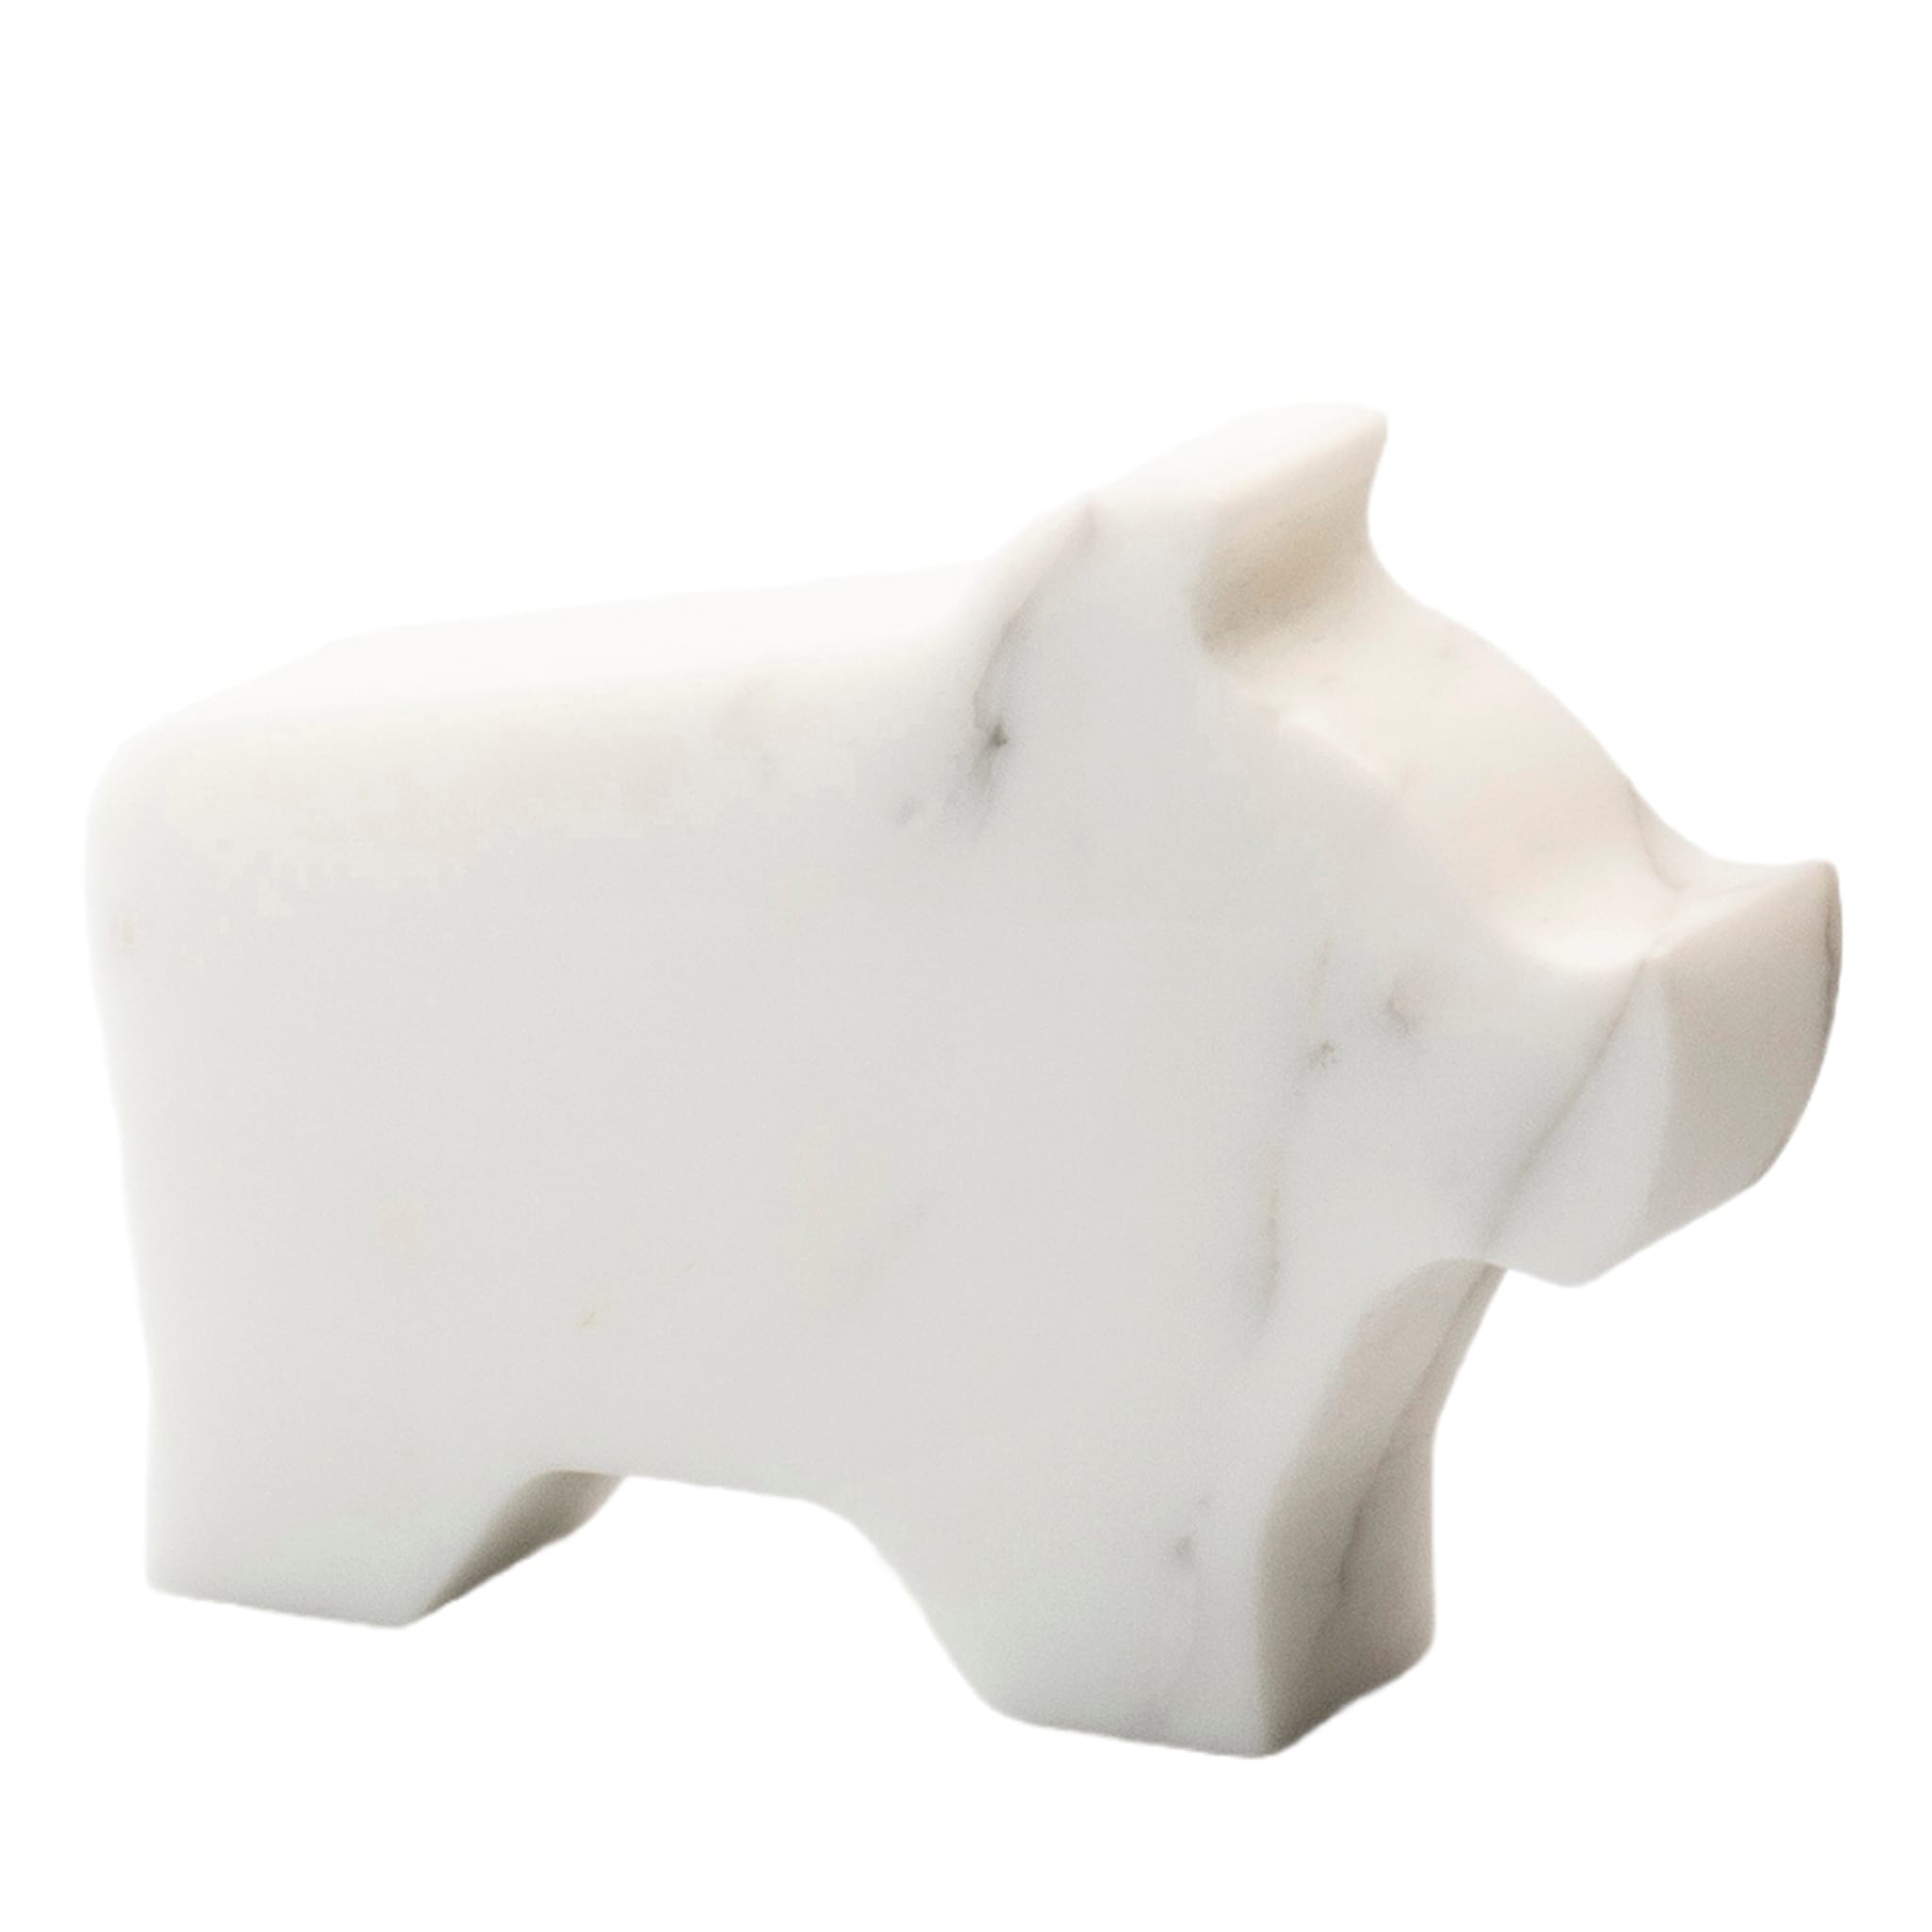 Petite statuette blanche de cochon par Alessandra Grasso - Vue principale